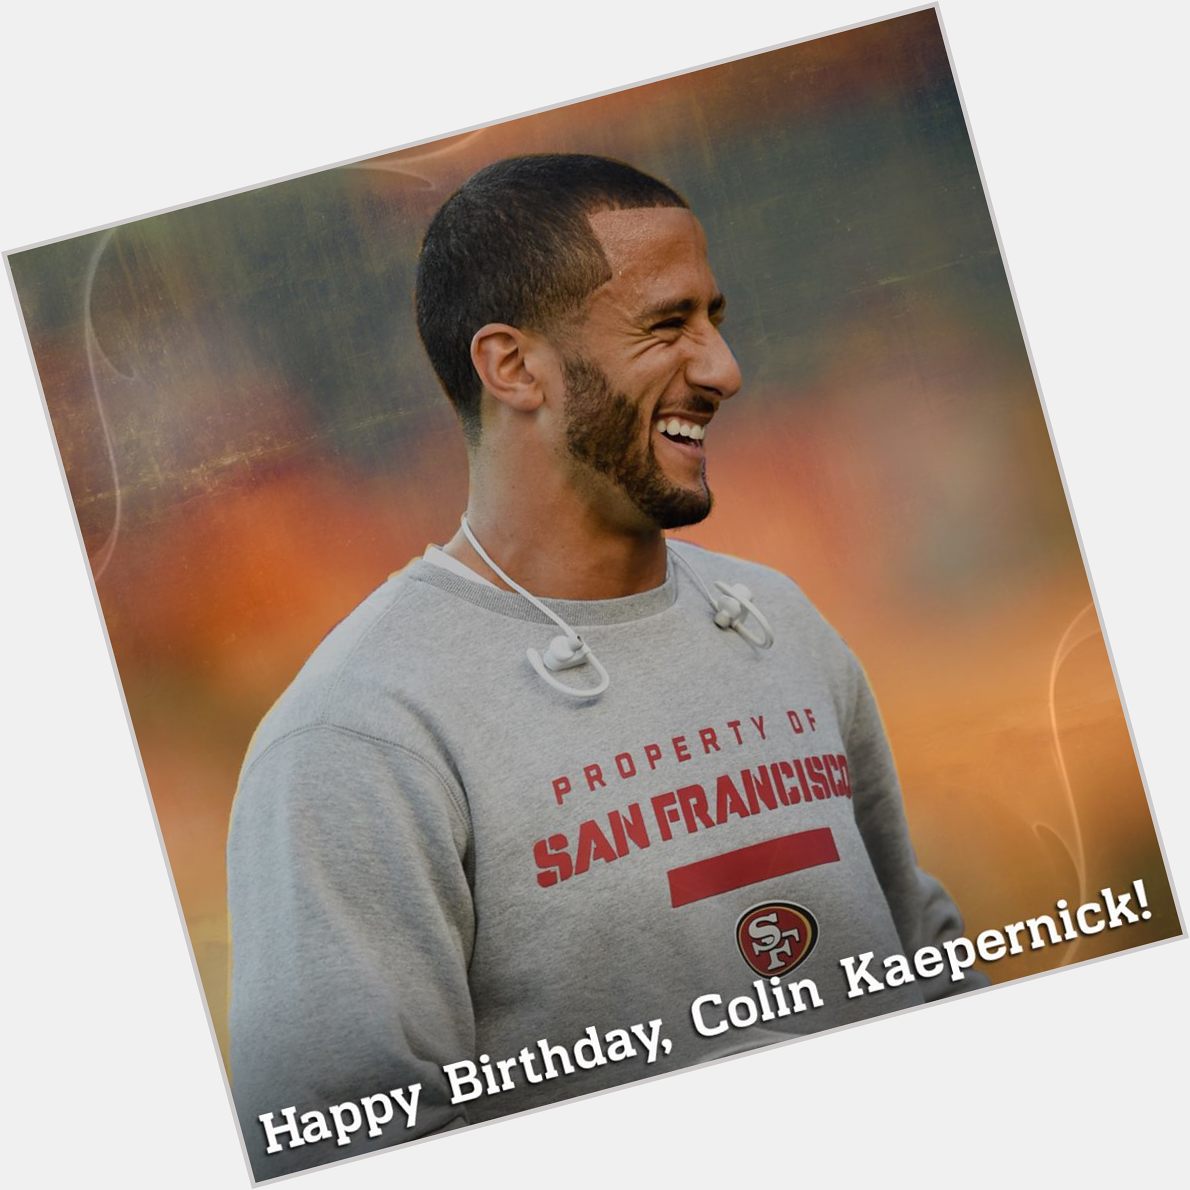 Happy birthday to 49ers QB Colin Kaepernick!
via  